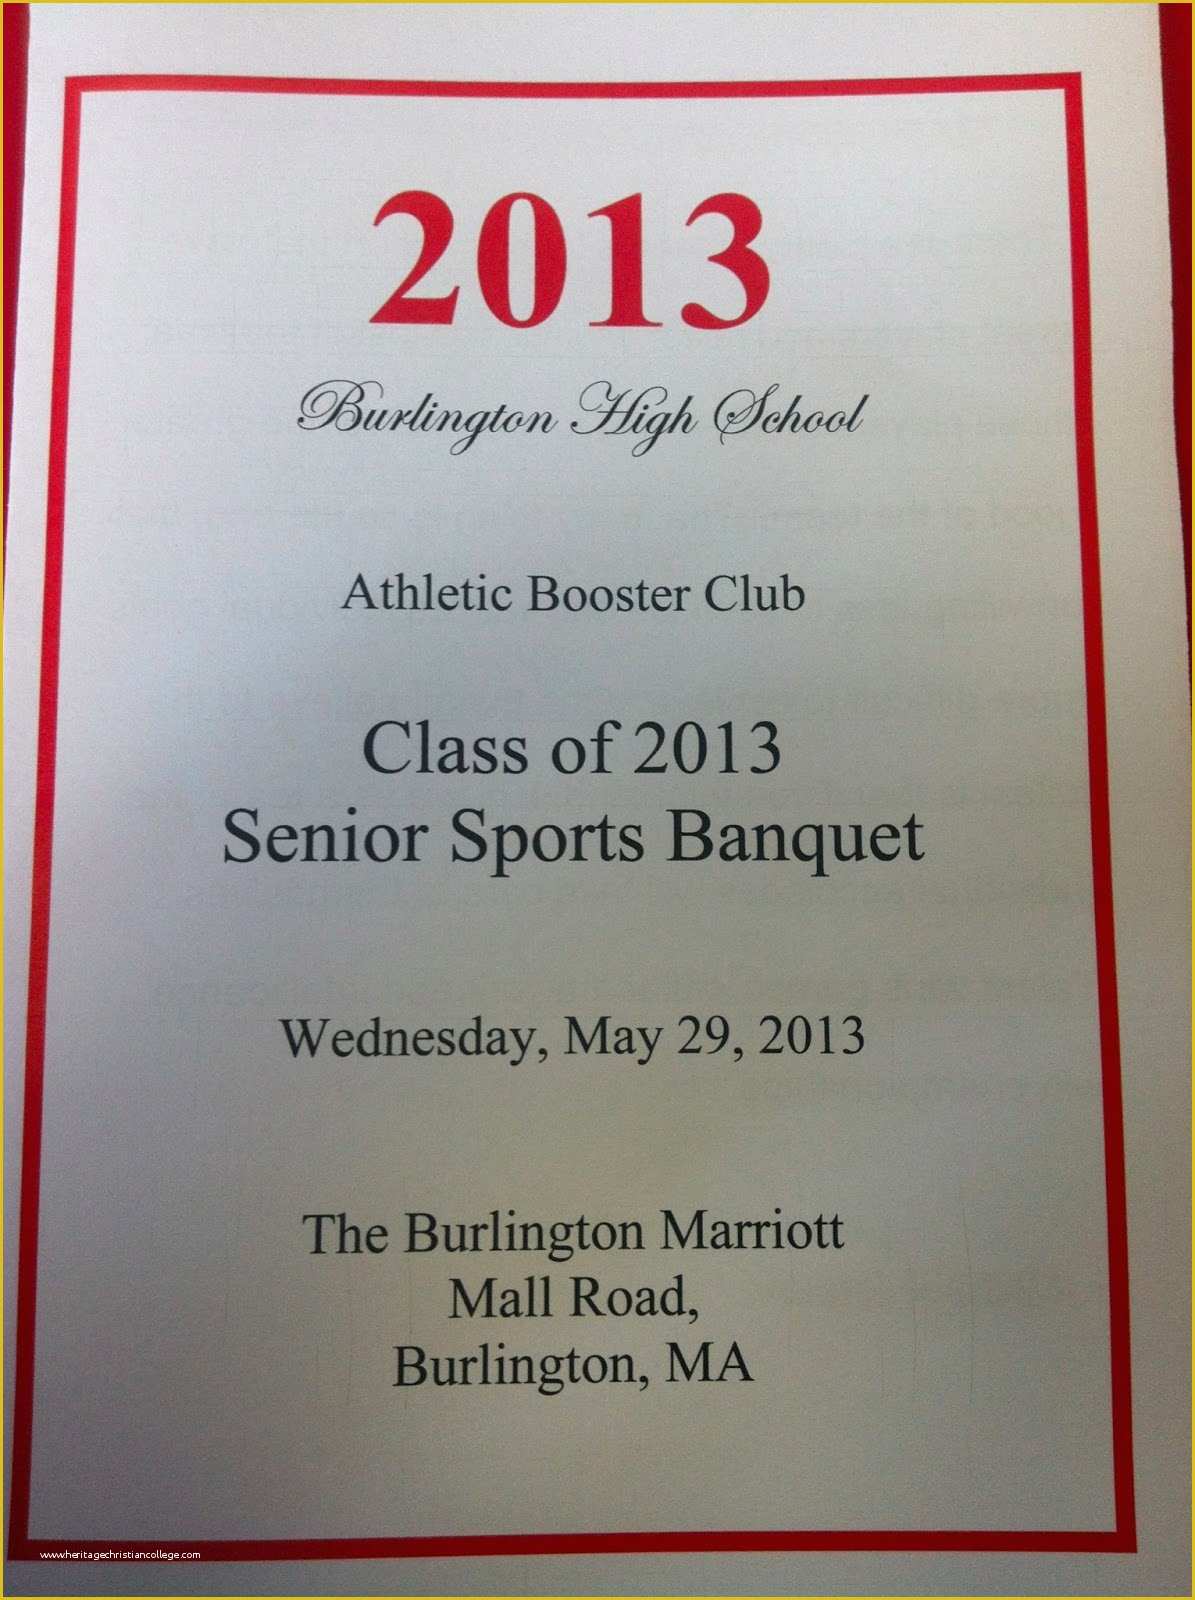 Sports Banquet Program Templates Free Of Burlington High School Principal S Blog 2013 athletic